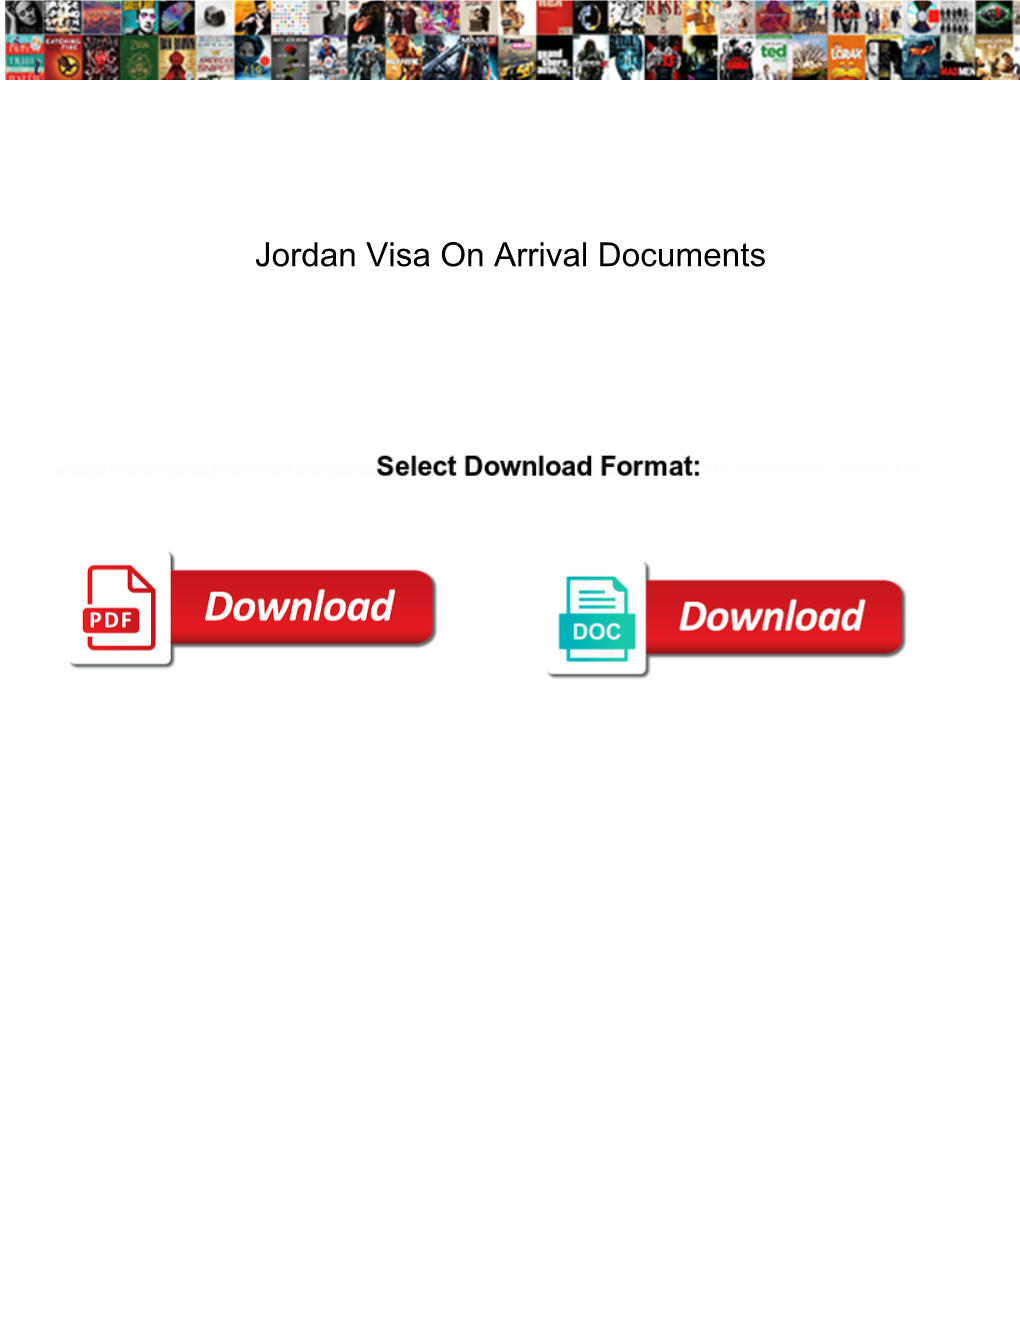 Jordan Visa on Arrival Documents